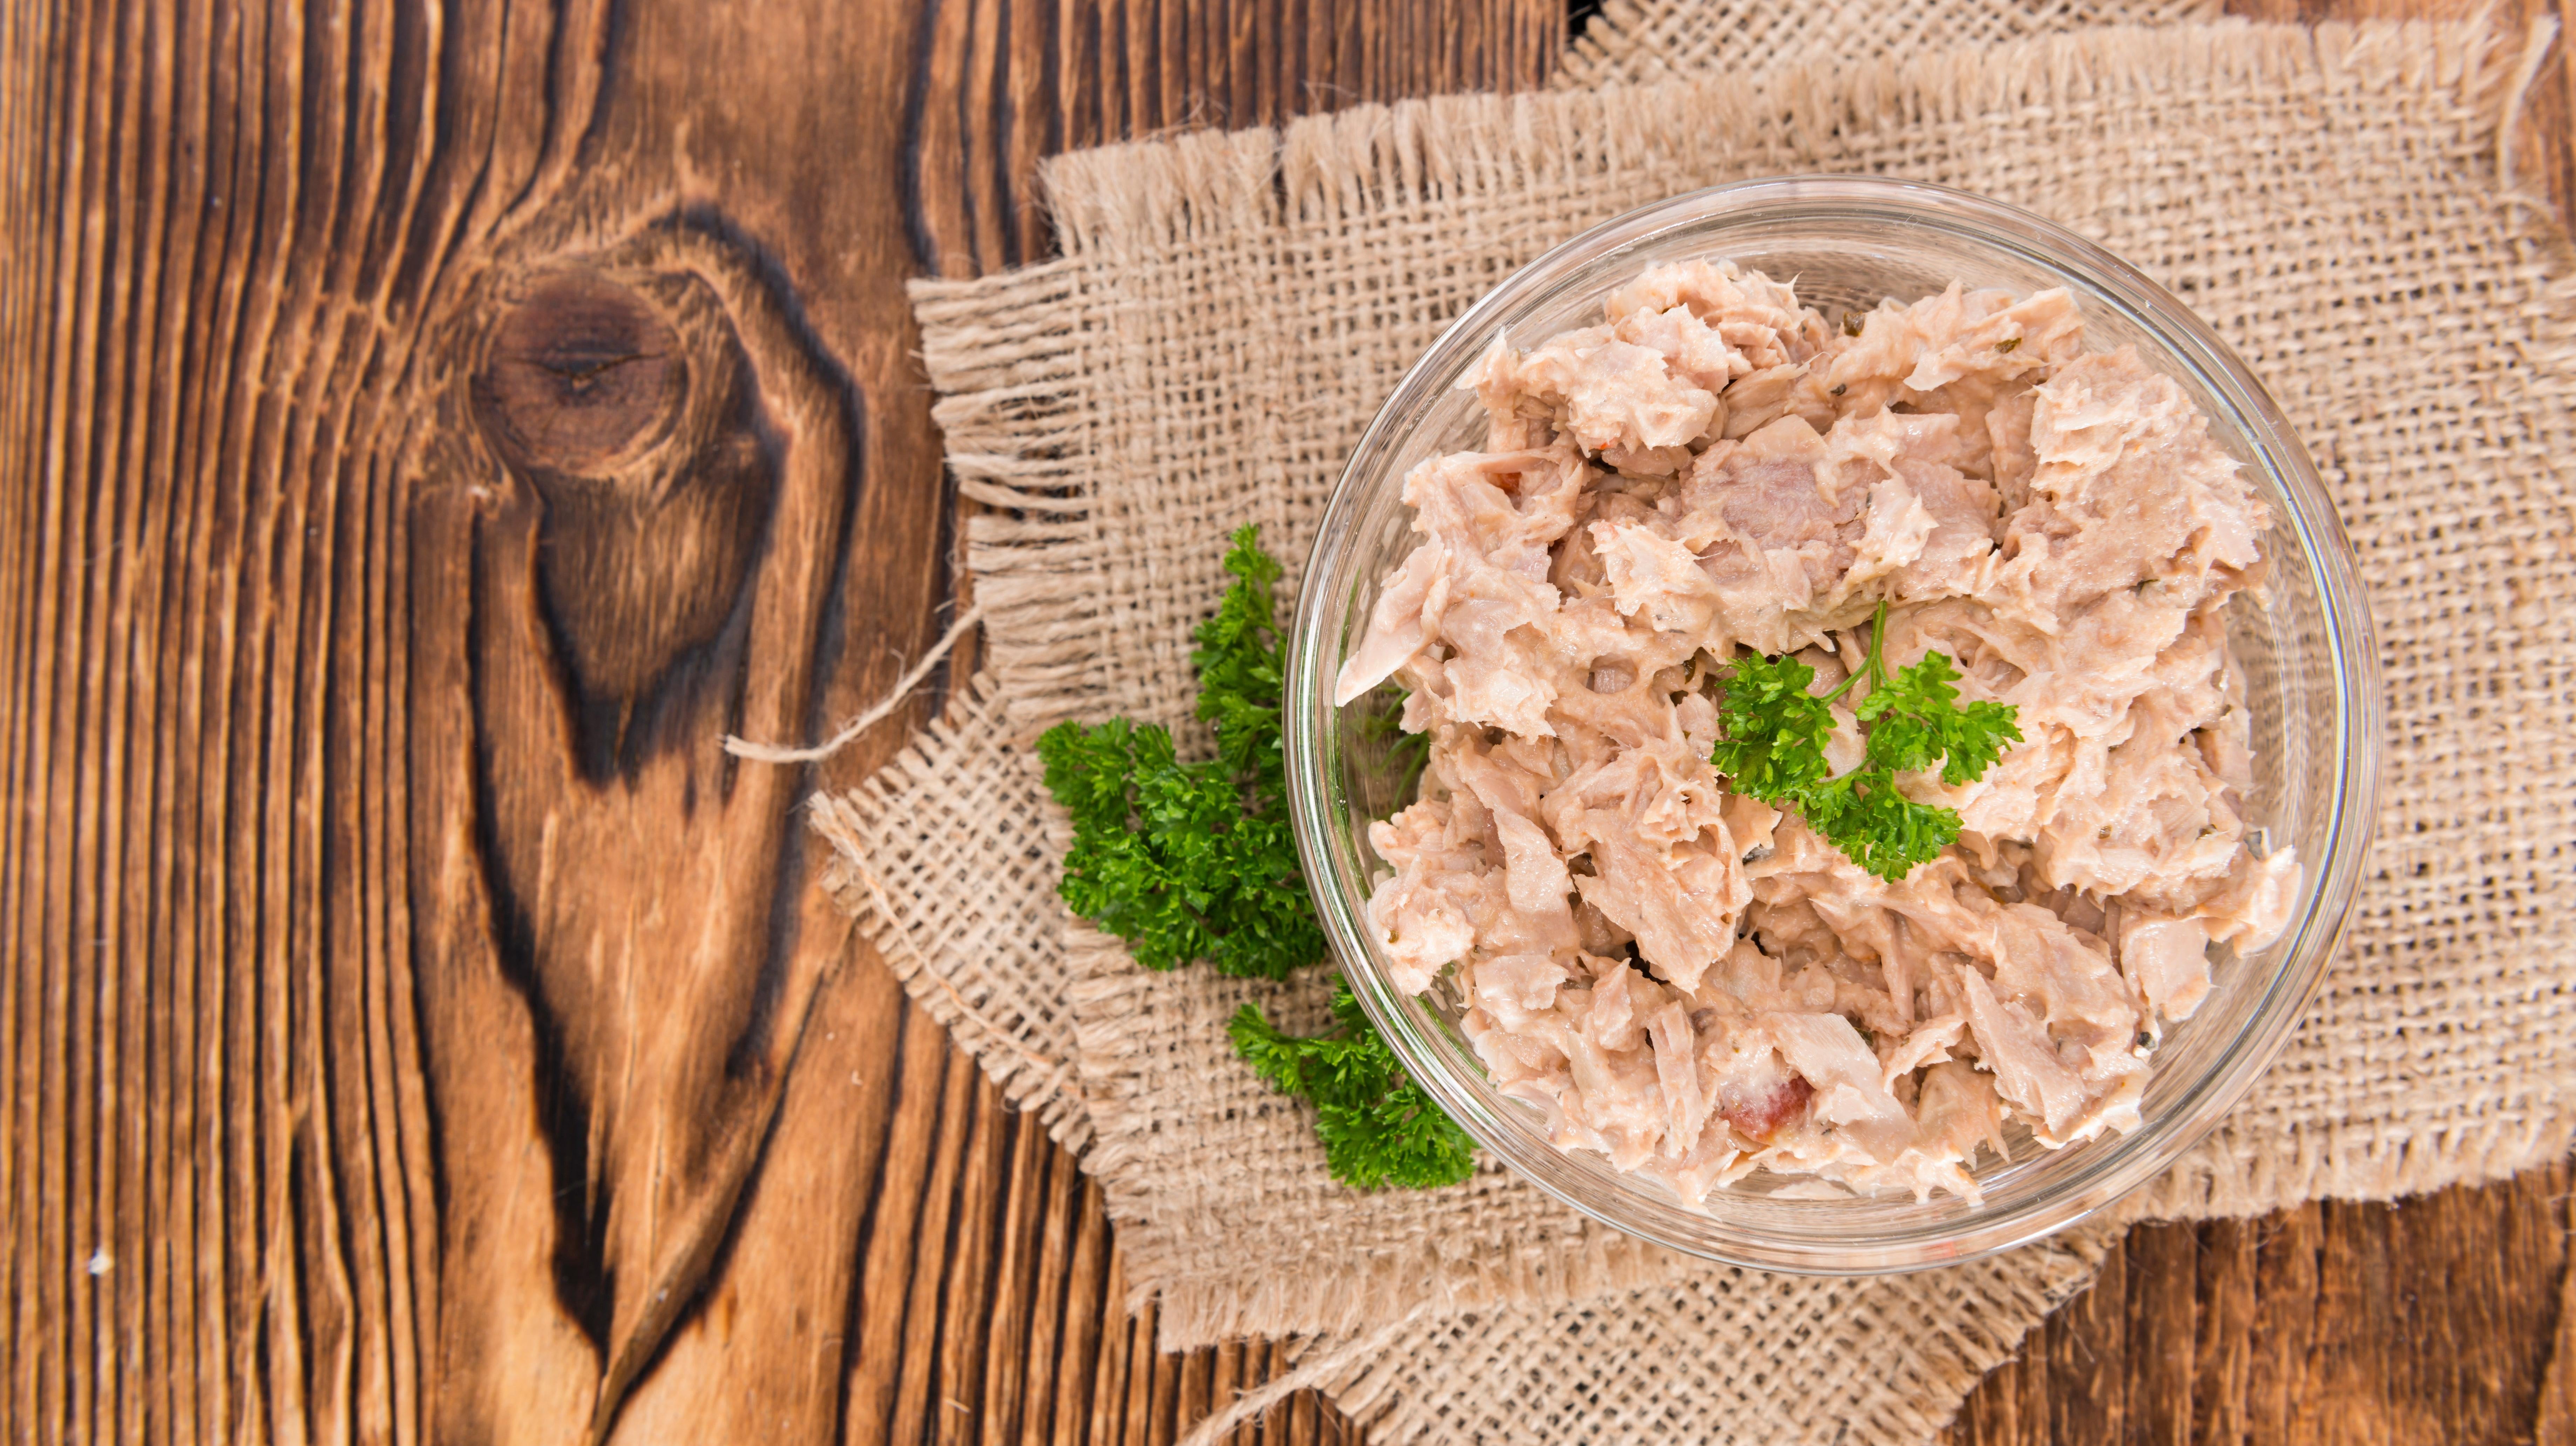 11 Ways to Make a Better Tuna Sandwich